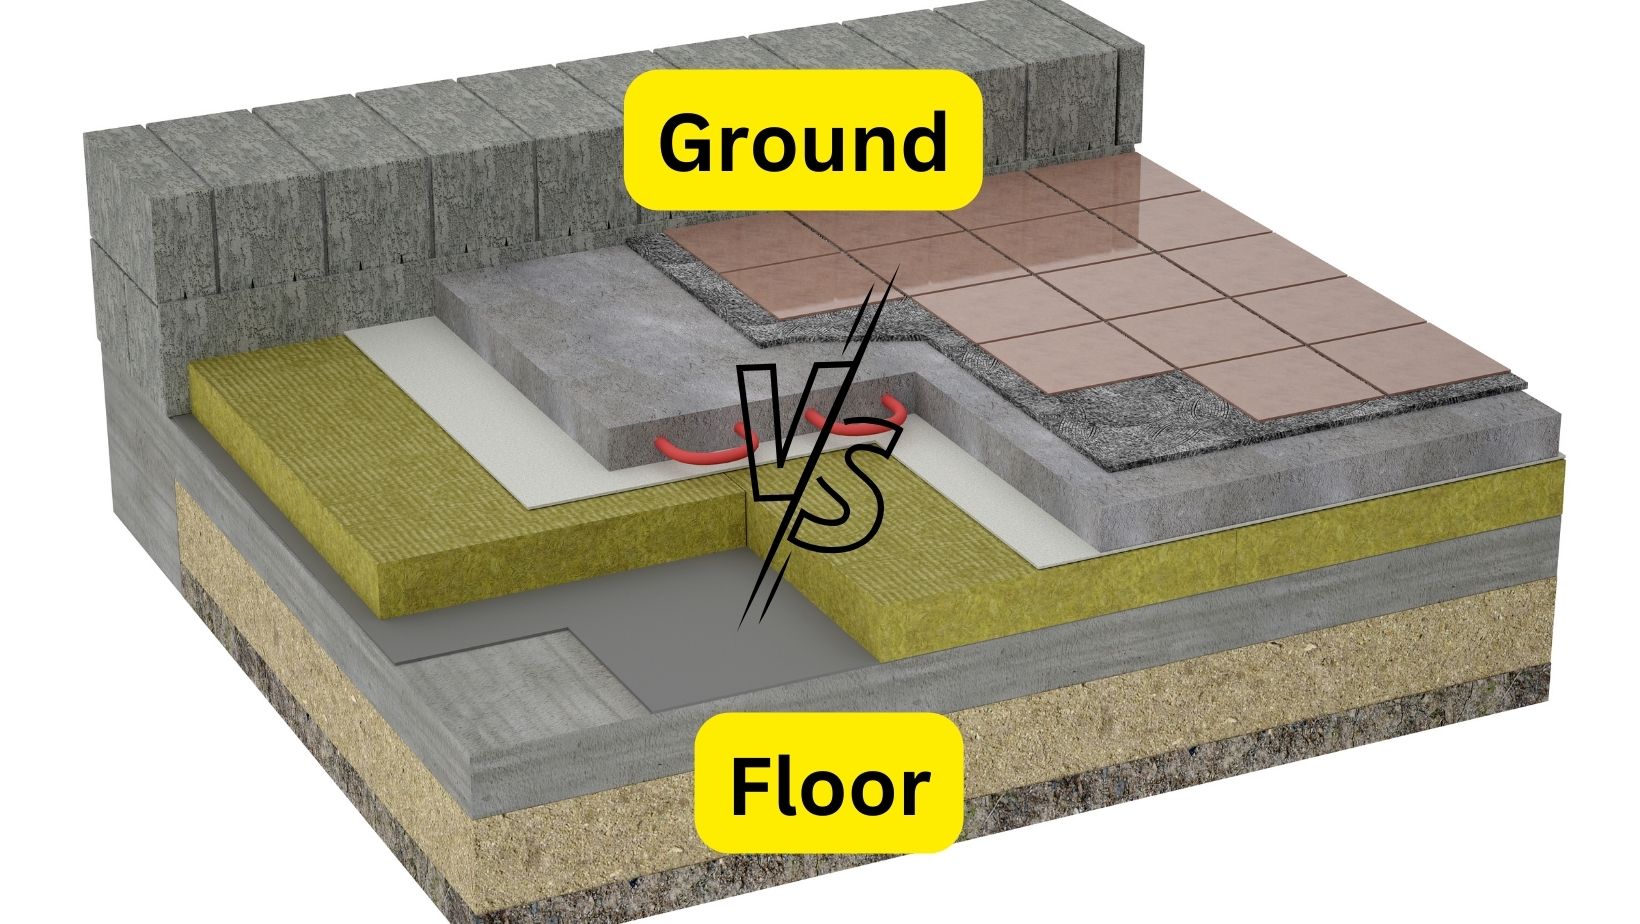 Ground and Floor